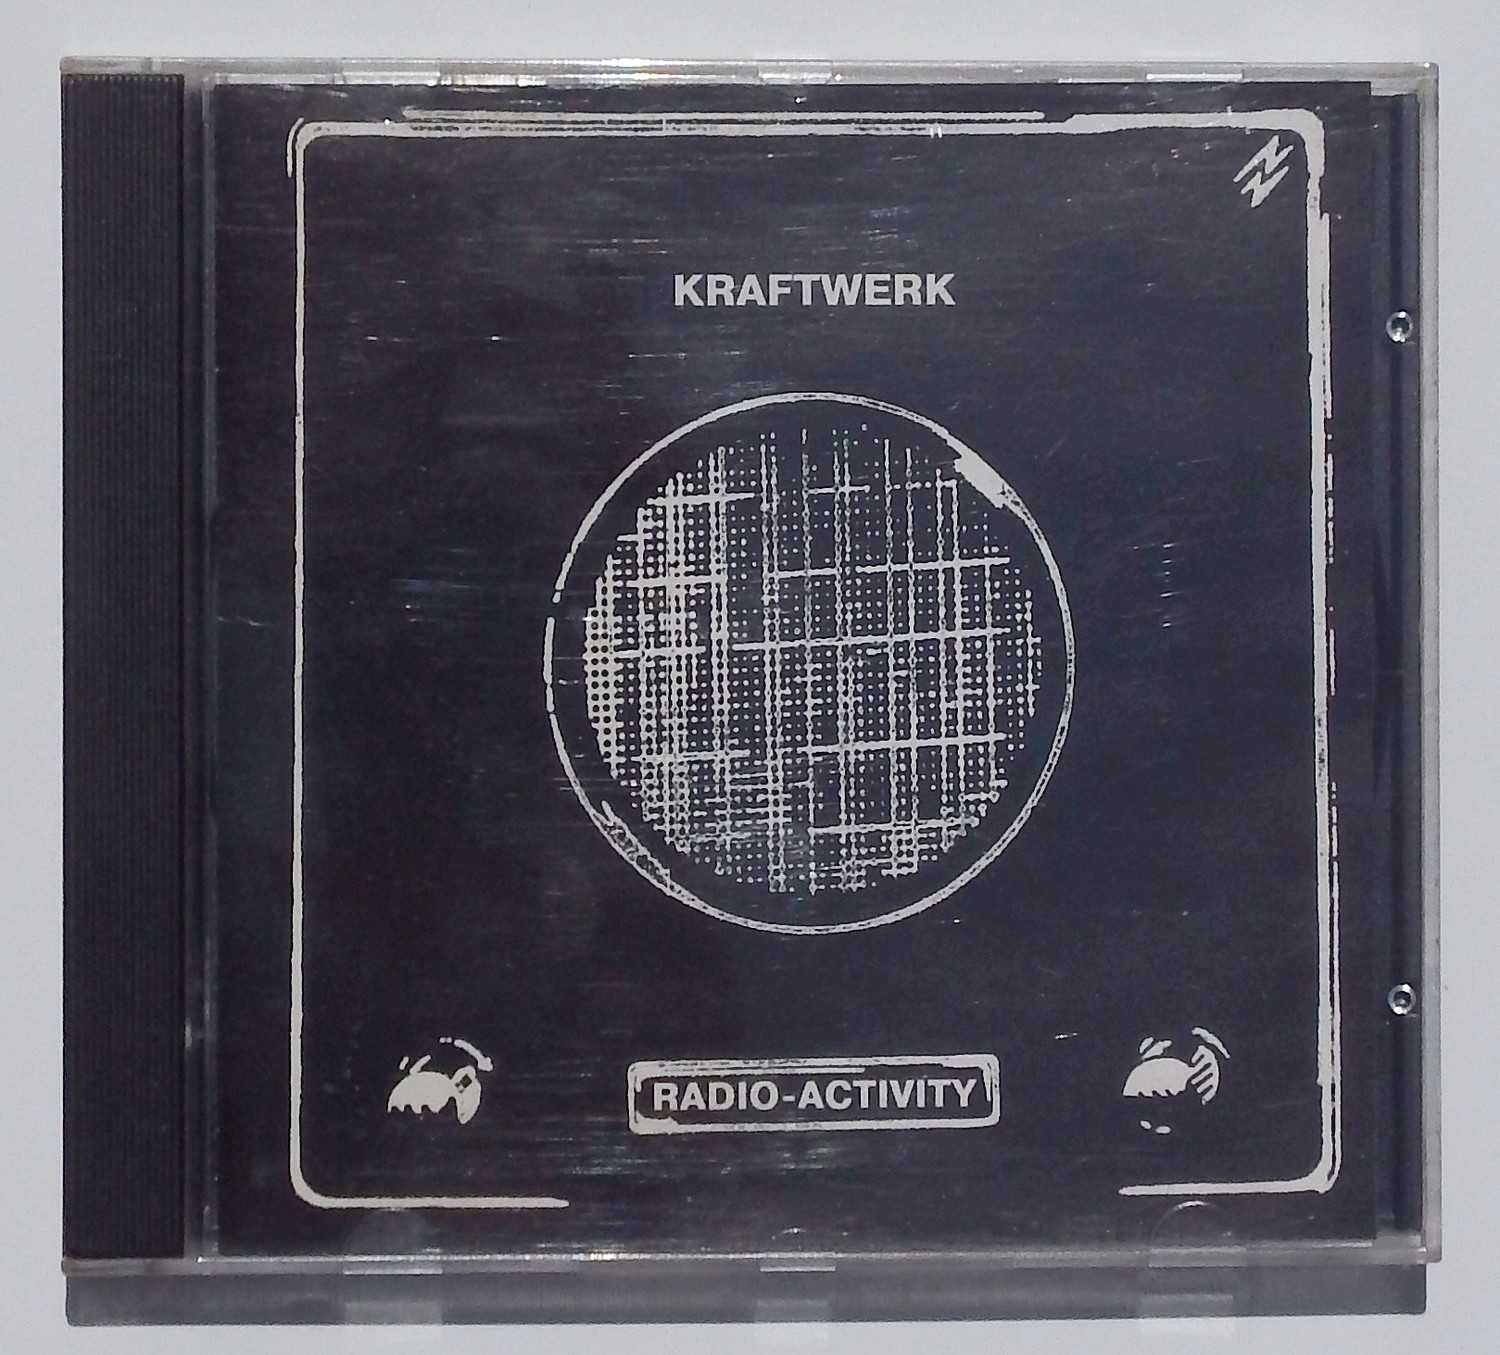 Kraftwerk - "Radio-Aktivity" [Krautrock]